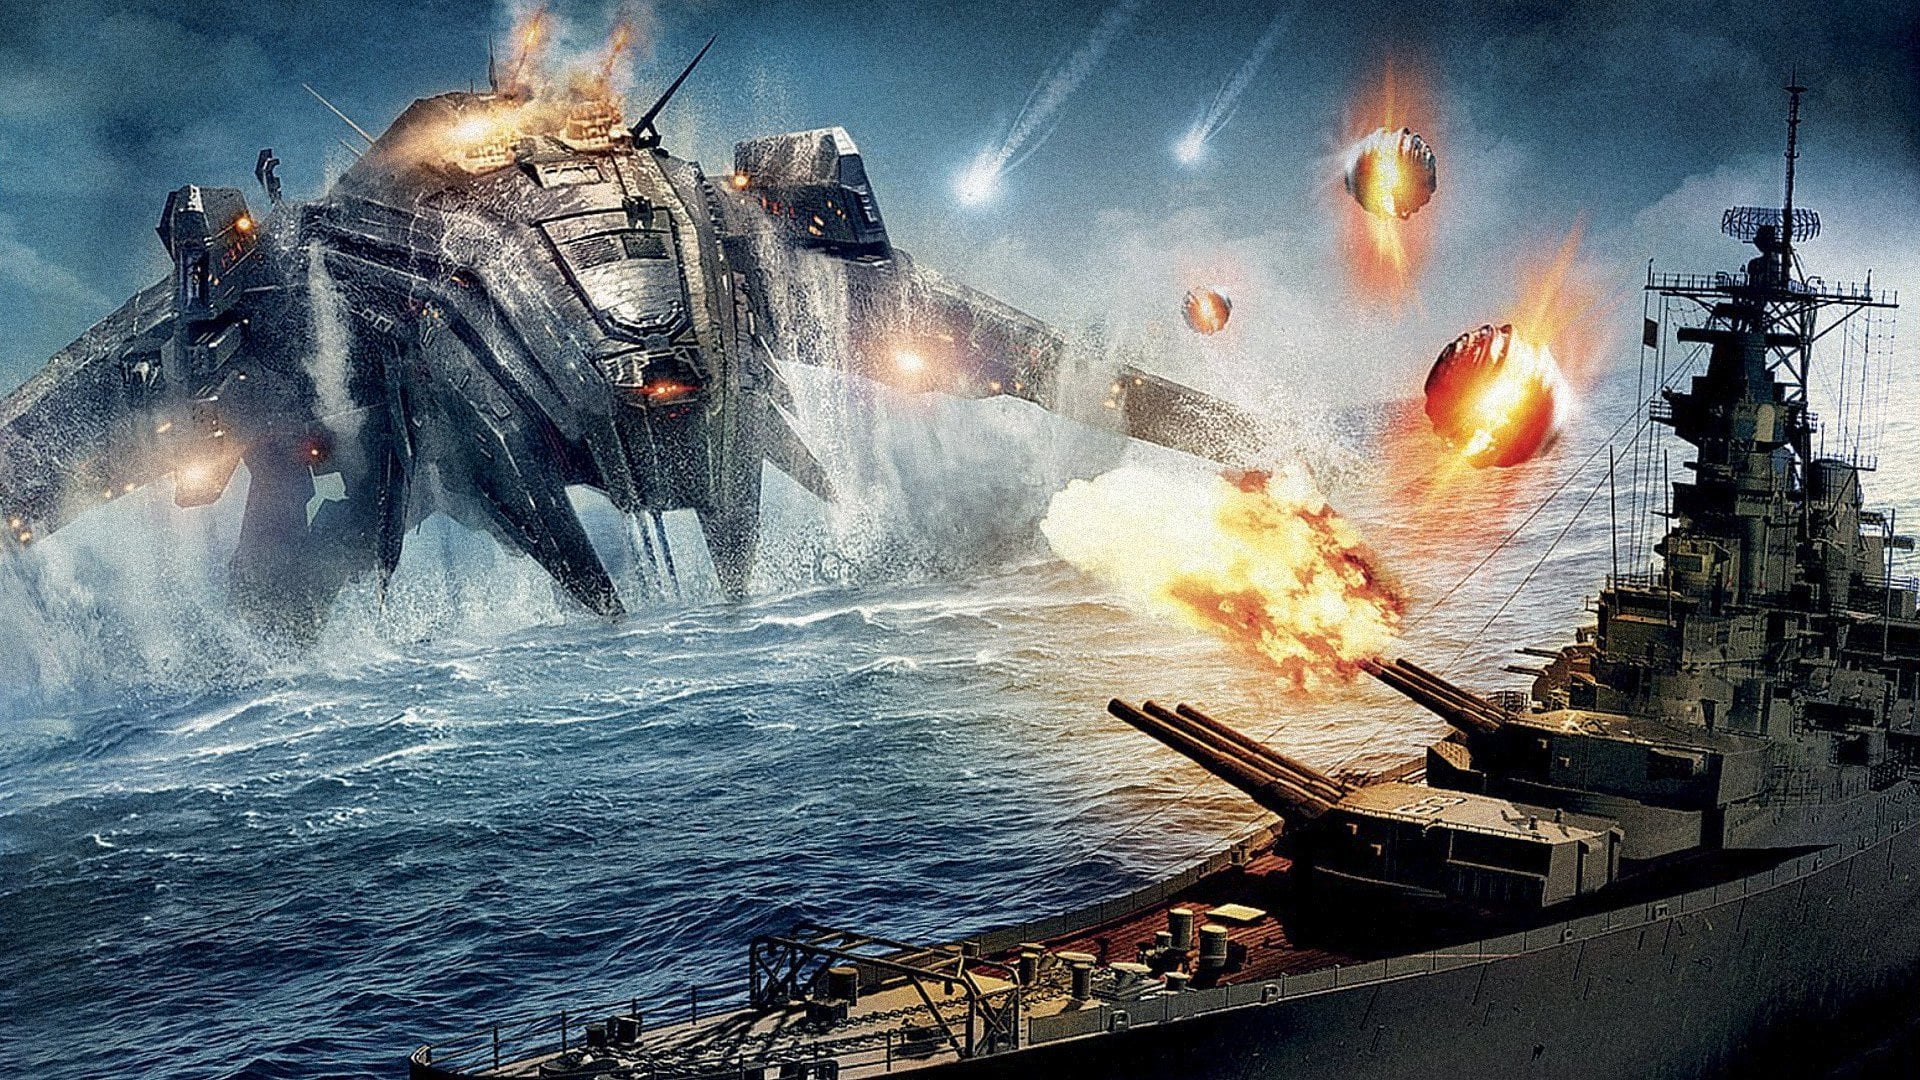 Movie, Battleship, Battleship (Movie), Warship, water, fire